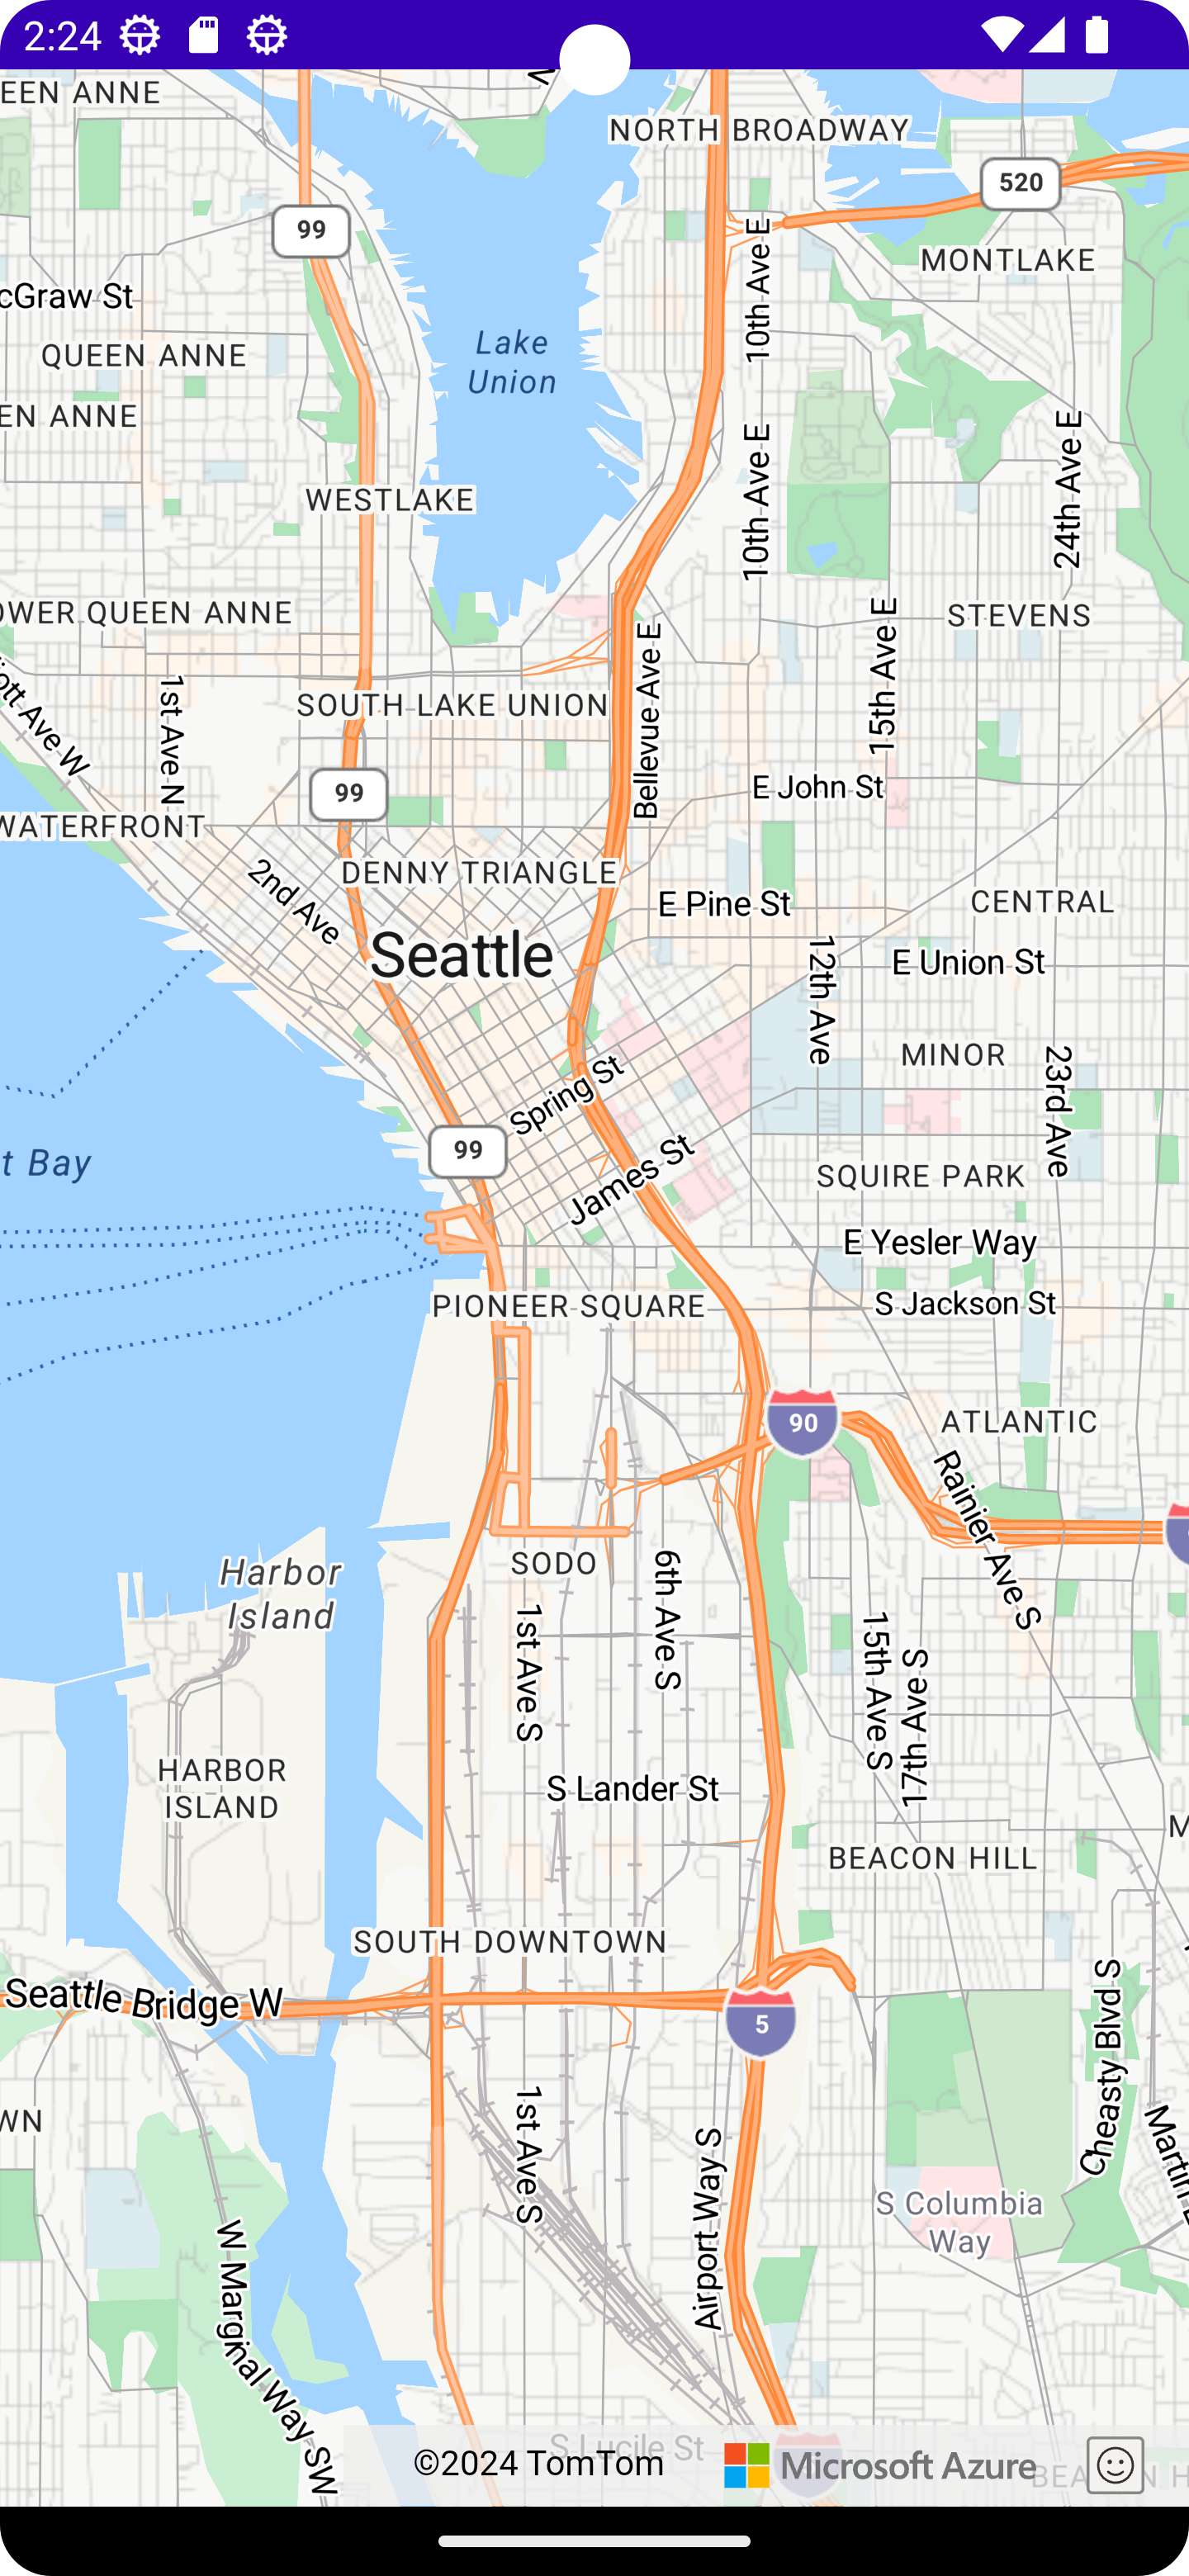 Captura de pantalla de un mapa en una vista web.